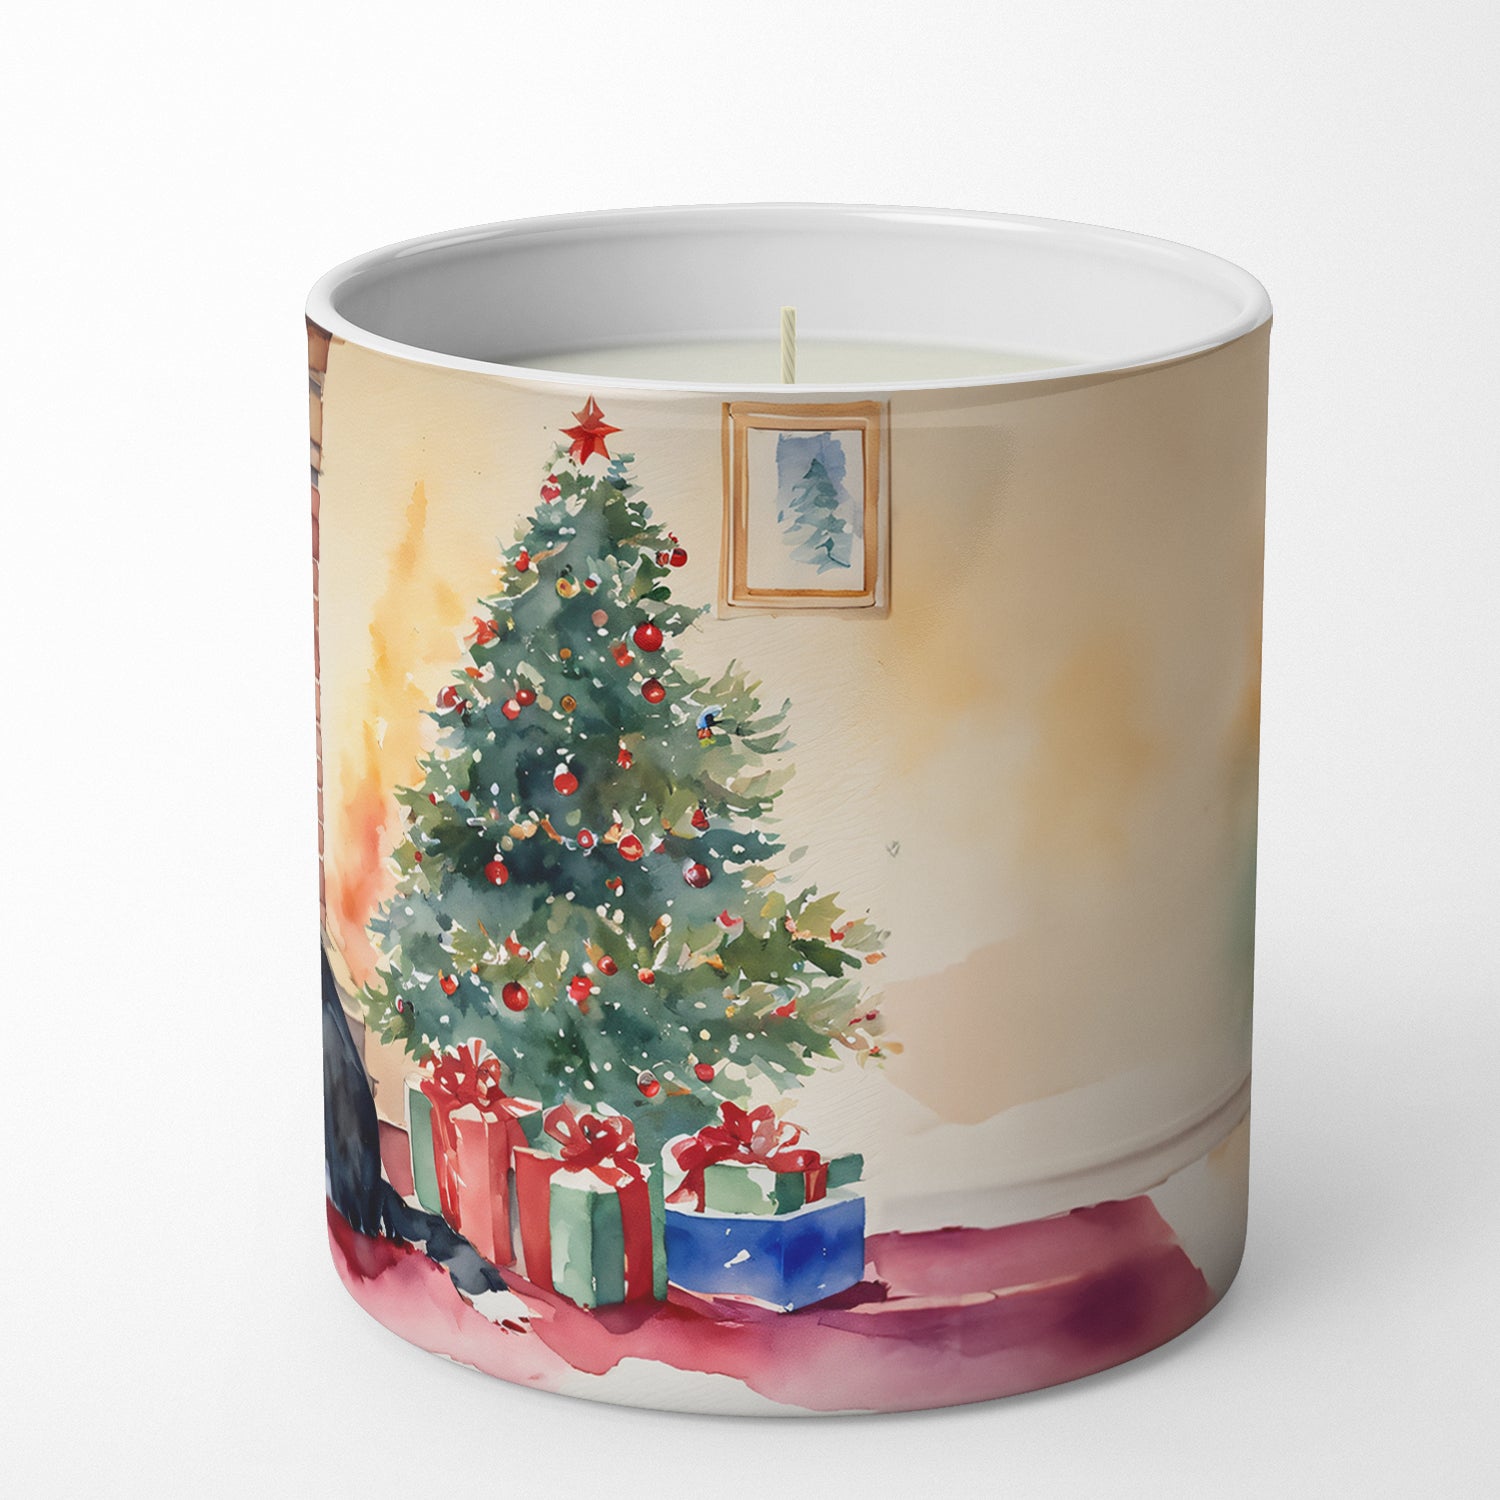 Appenzeller Sennenhund Cozy Christmas Decorative Soy Candle